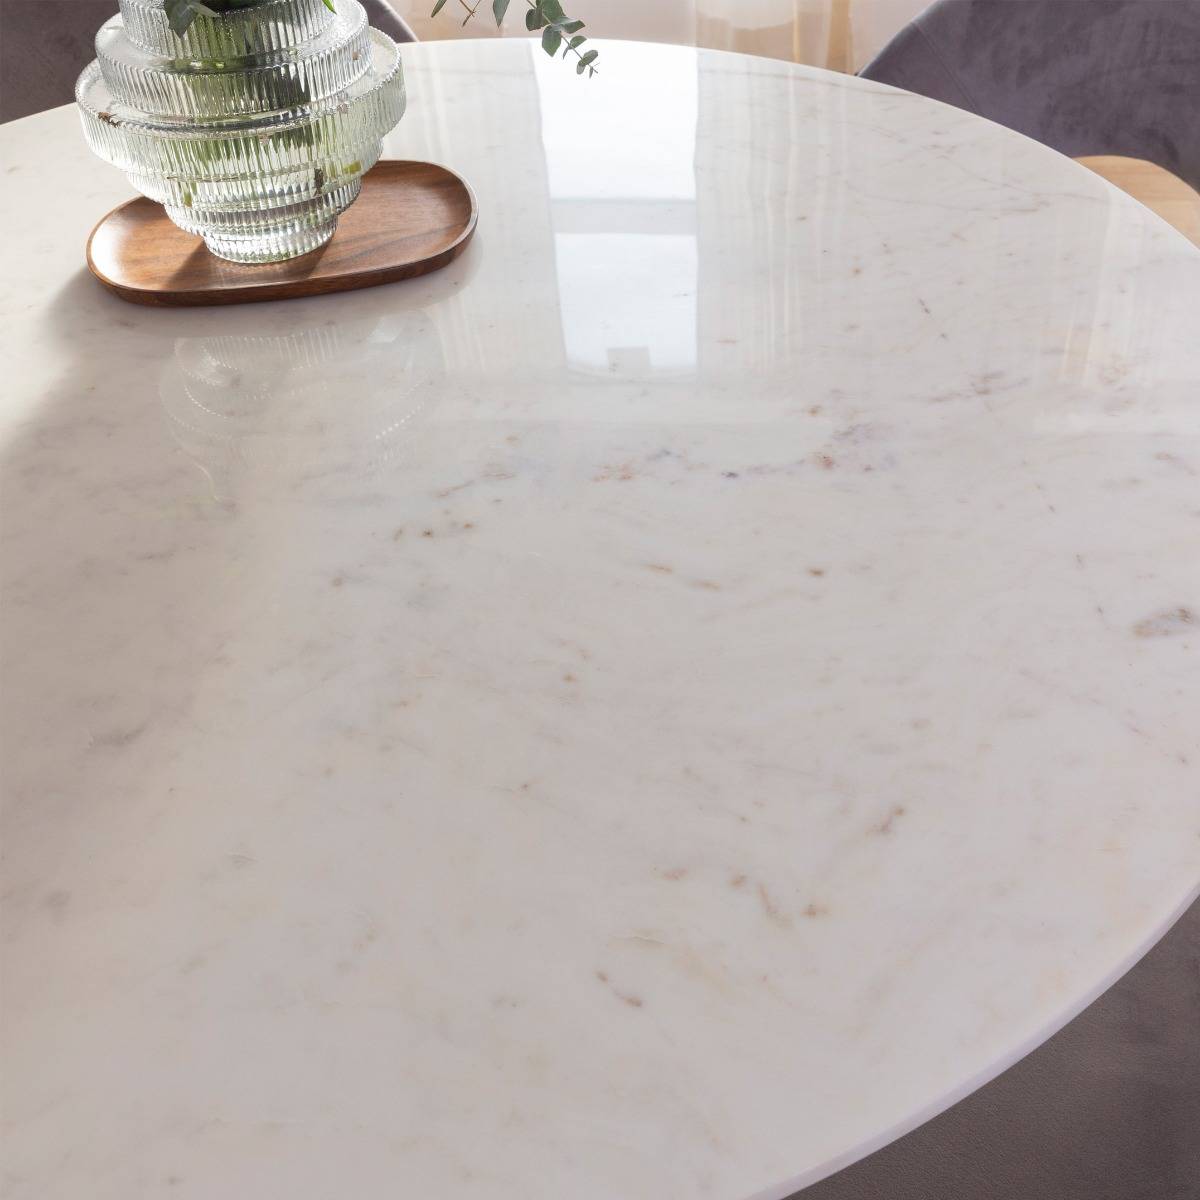 Table à manger ronde en marbre Servane